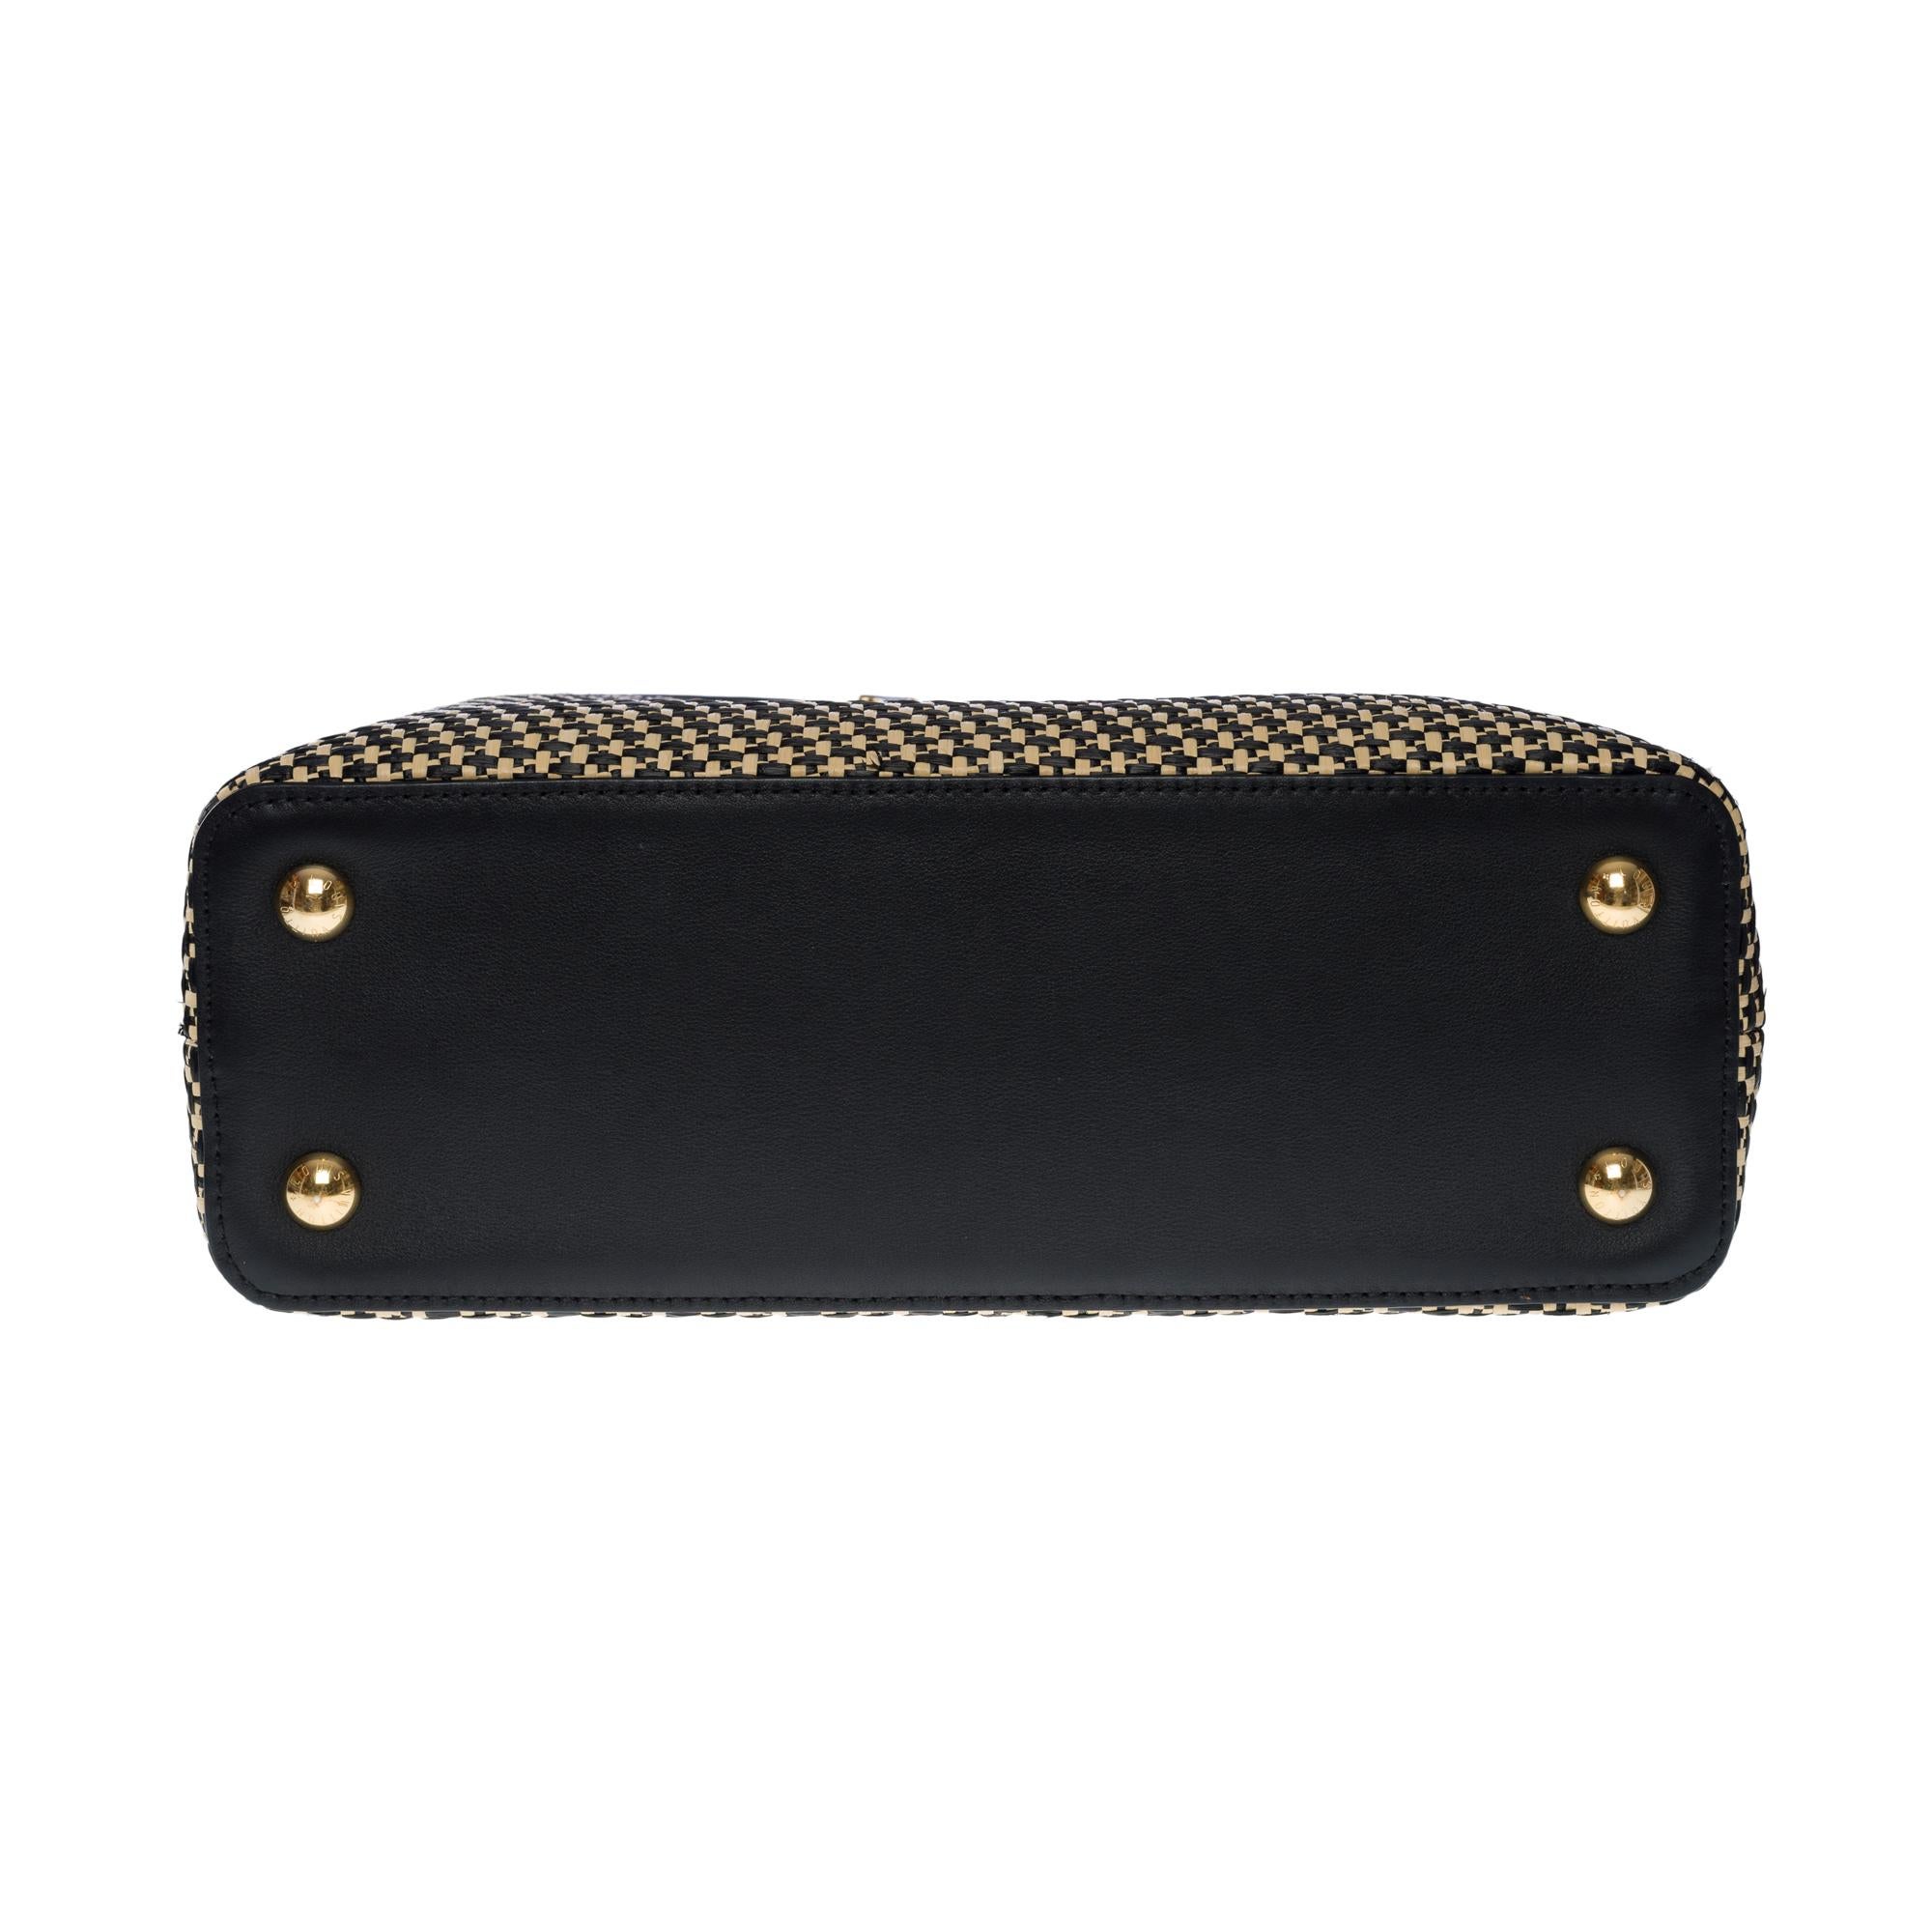 Limited Edition Louis Vuitton Capucines MM handbag strap in braided Raffia, GHW For Sale 6